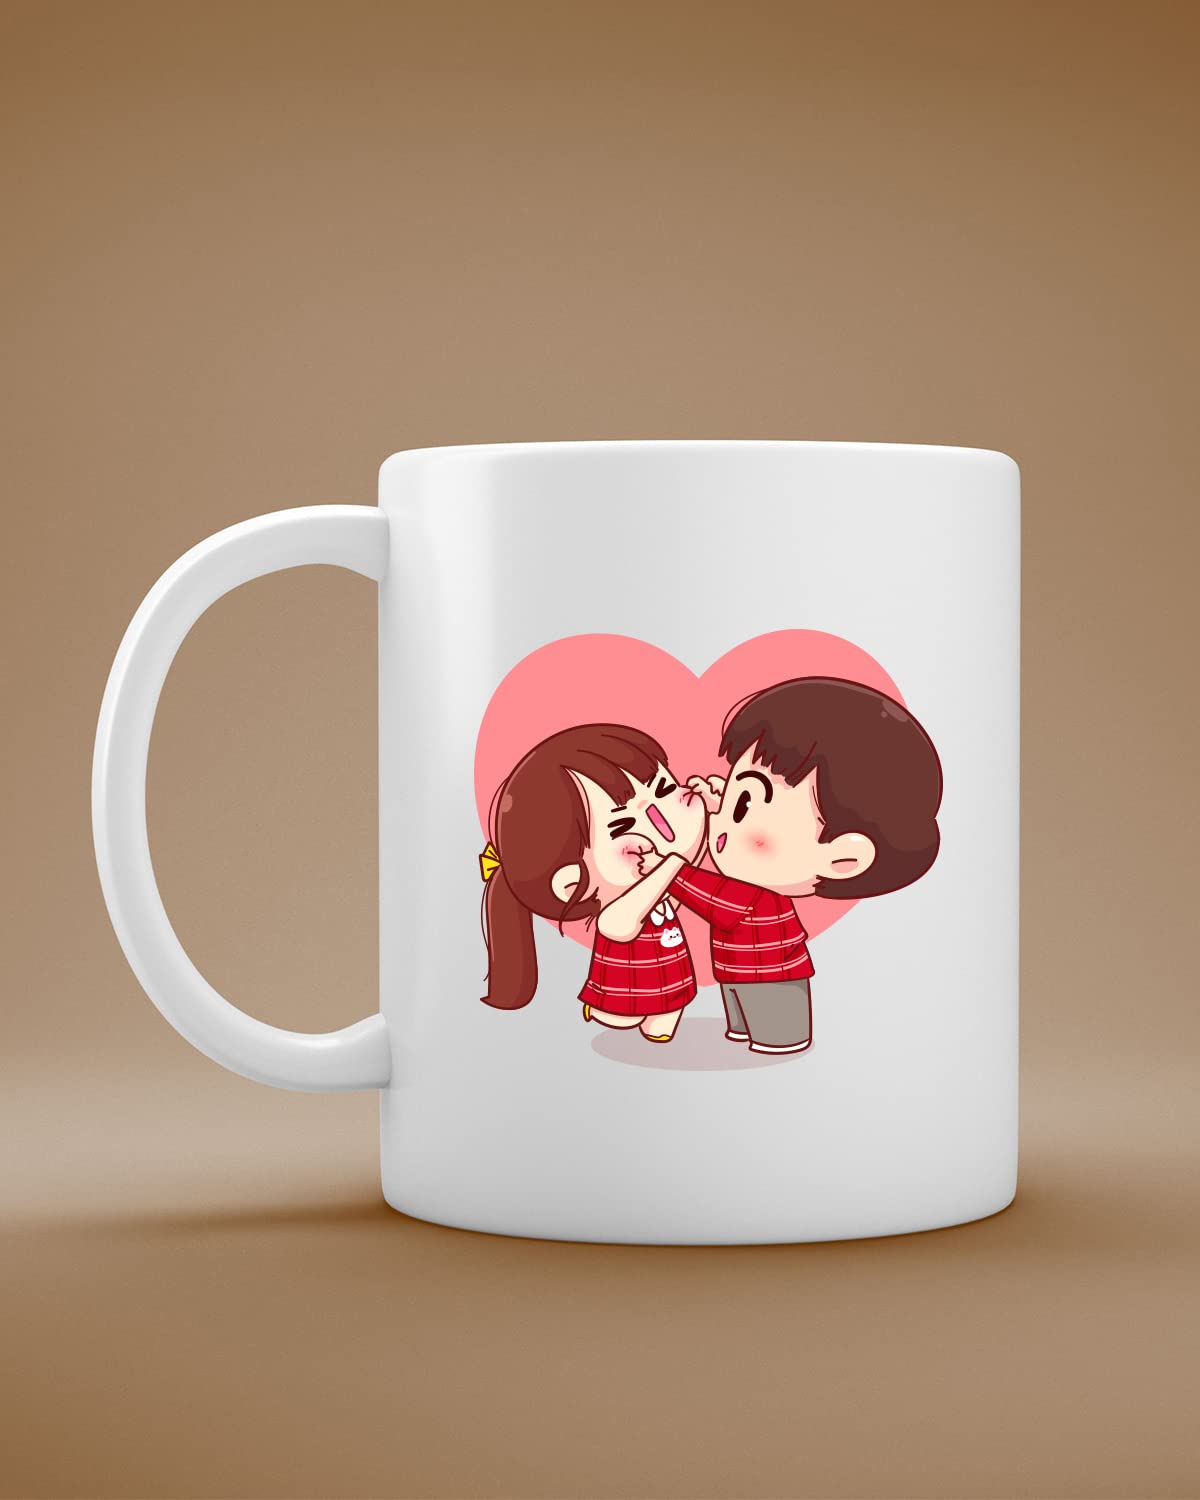 Love Theme Coffee Mug - Valentines Day Gift for Wife Husband Girlfriend Boyfriend | Romantic Printed Coffee Mug for Birthday, Anniversary Gift, Valentine's Day